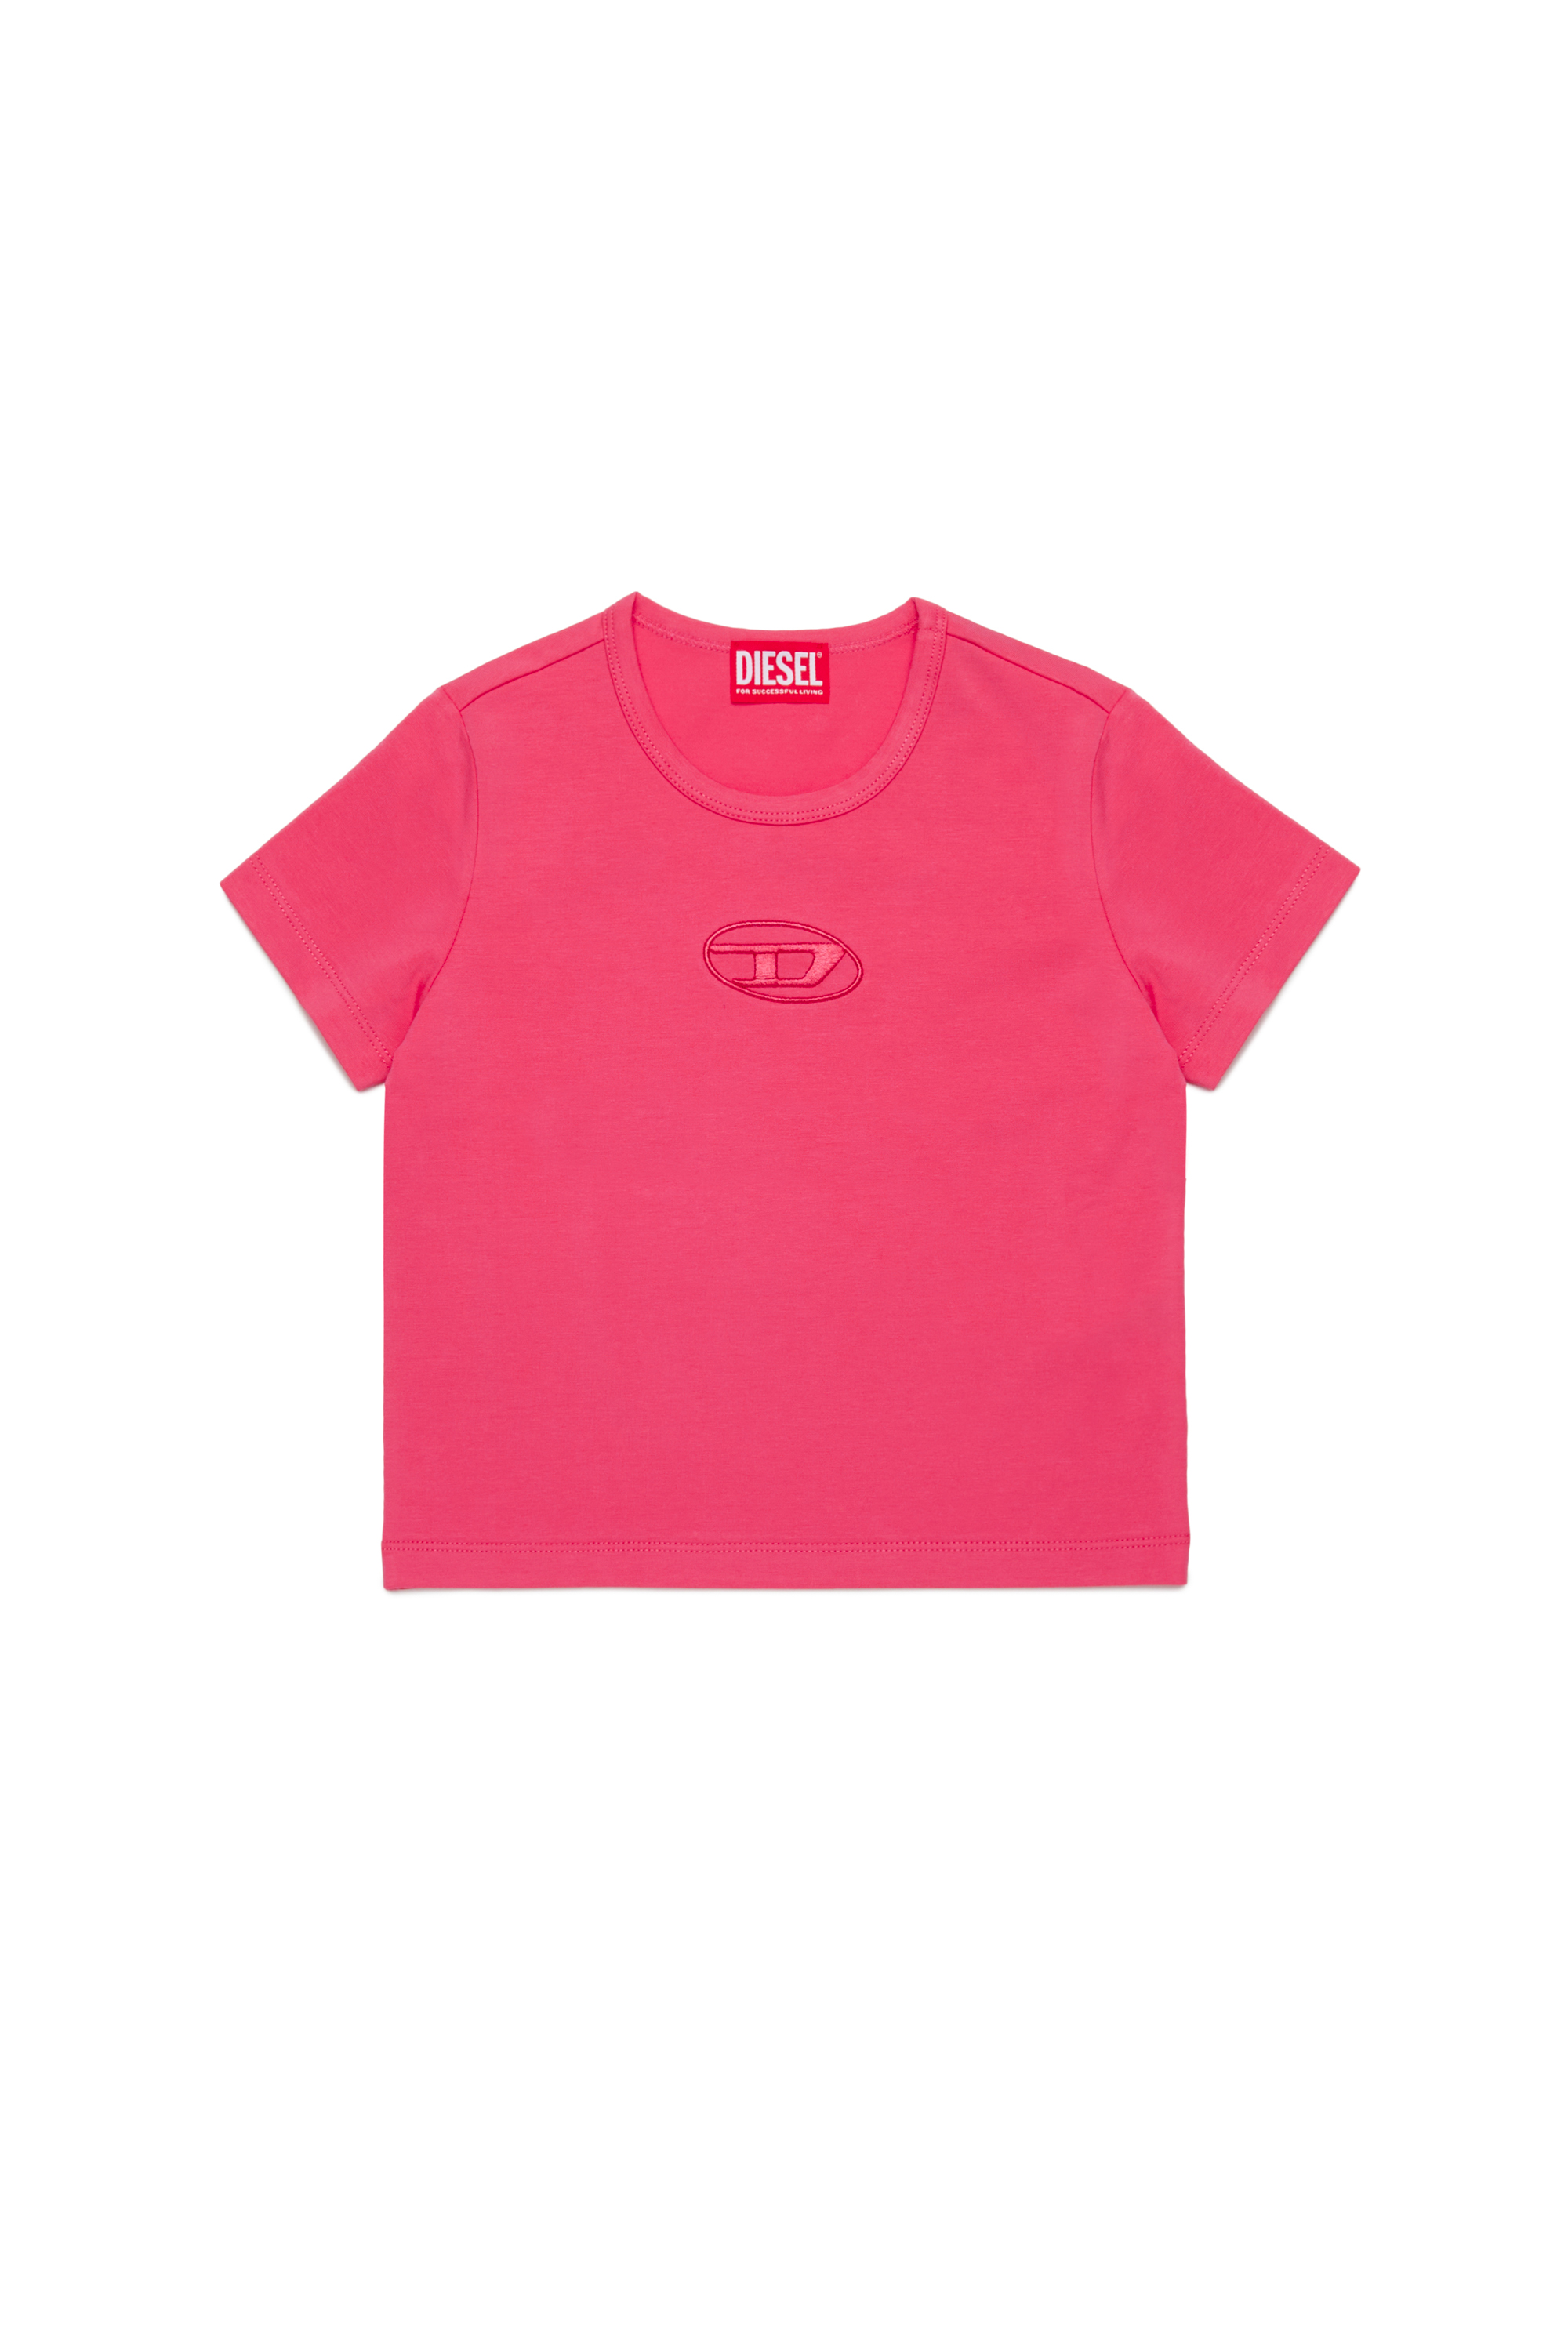 Diesel - TANGIEX, Femme T-shirt avec broderie Oval D ton sur ton in Rose - Image 1